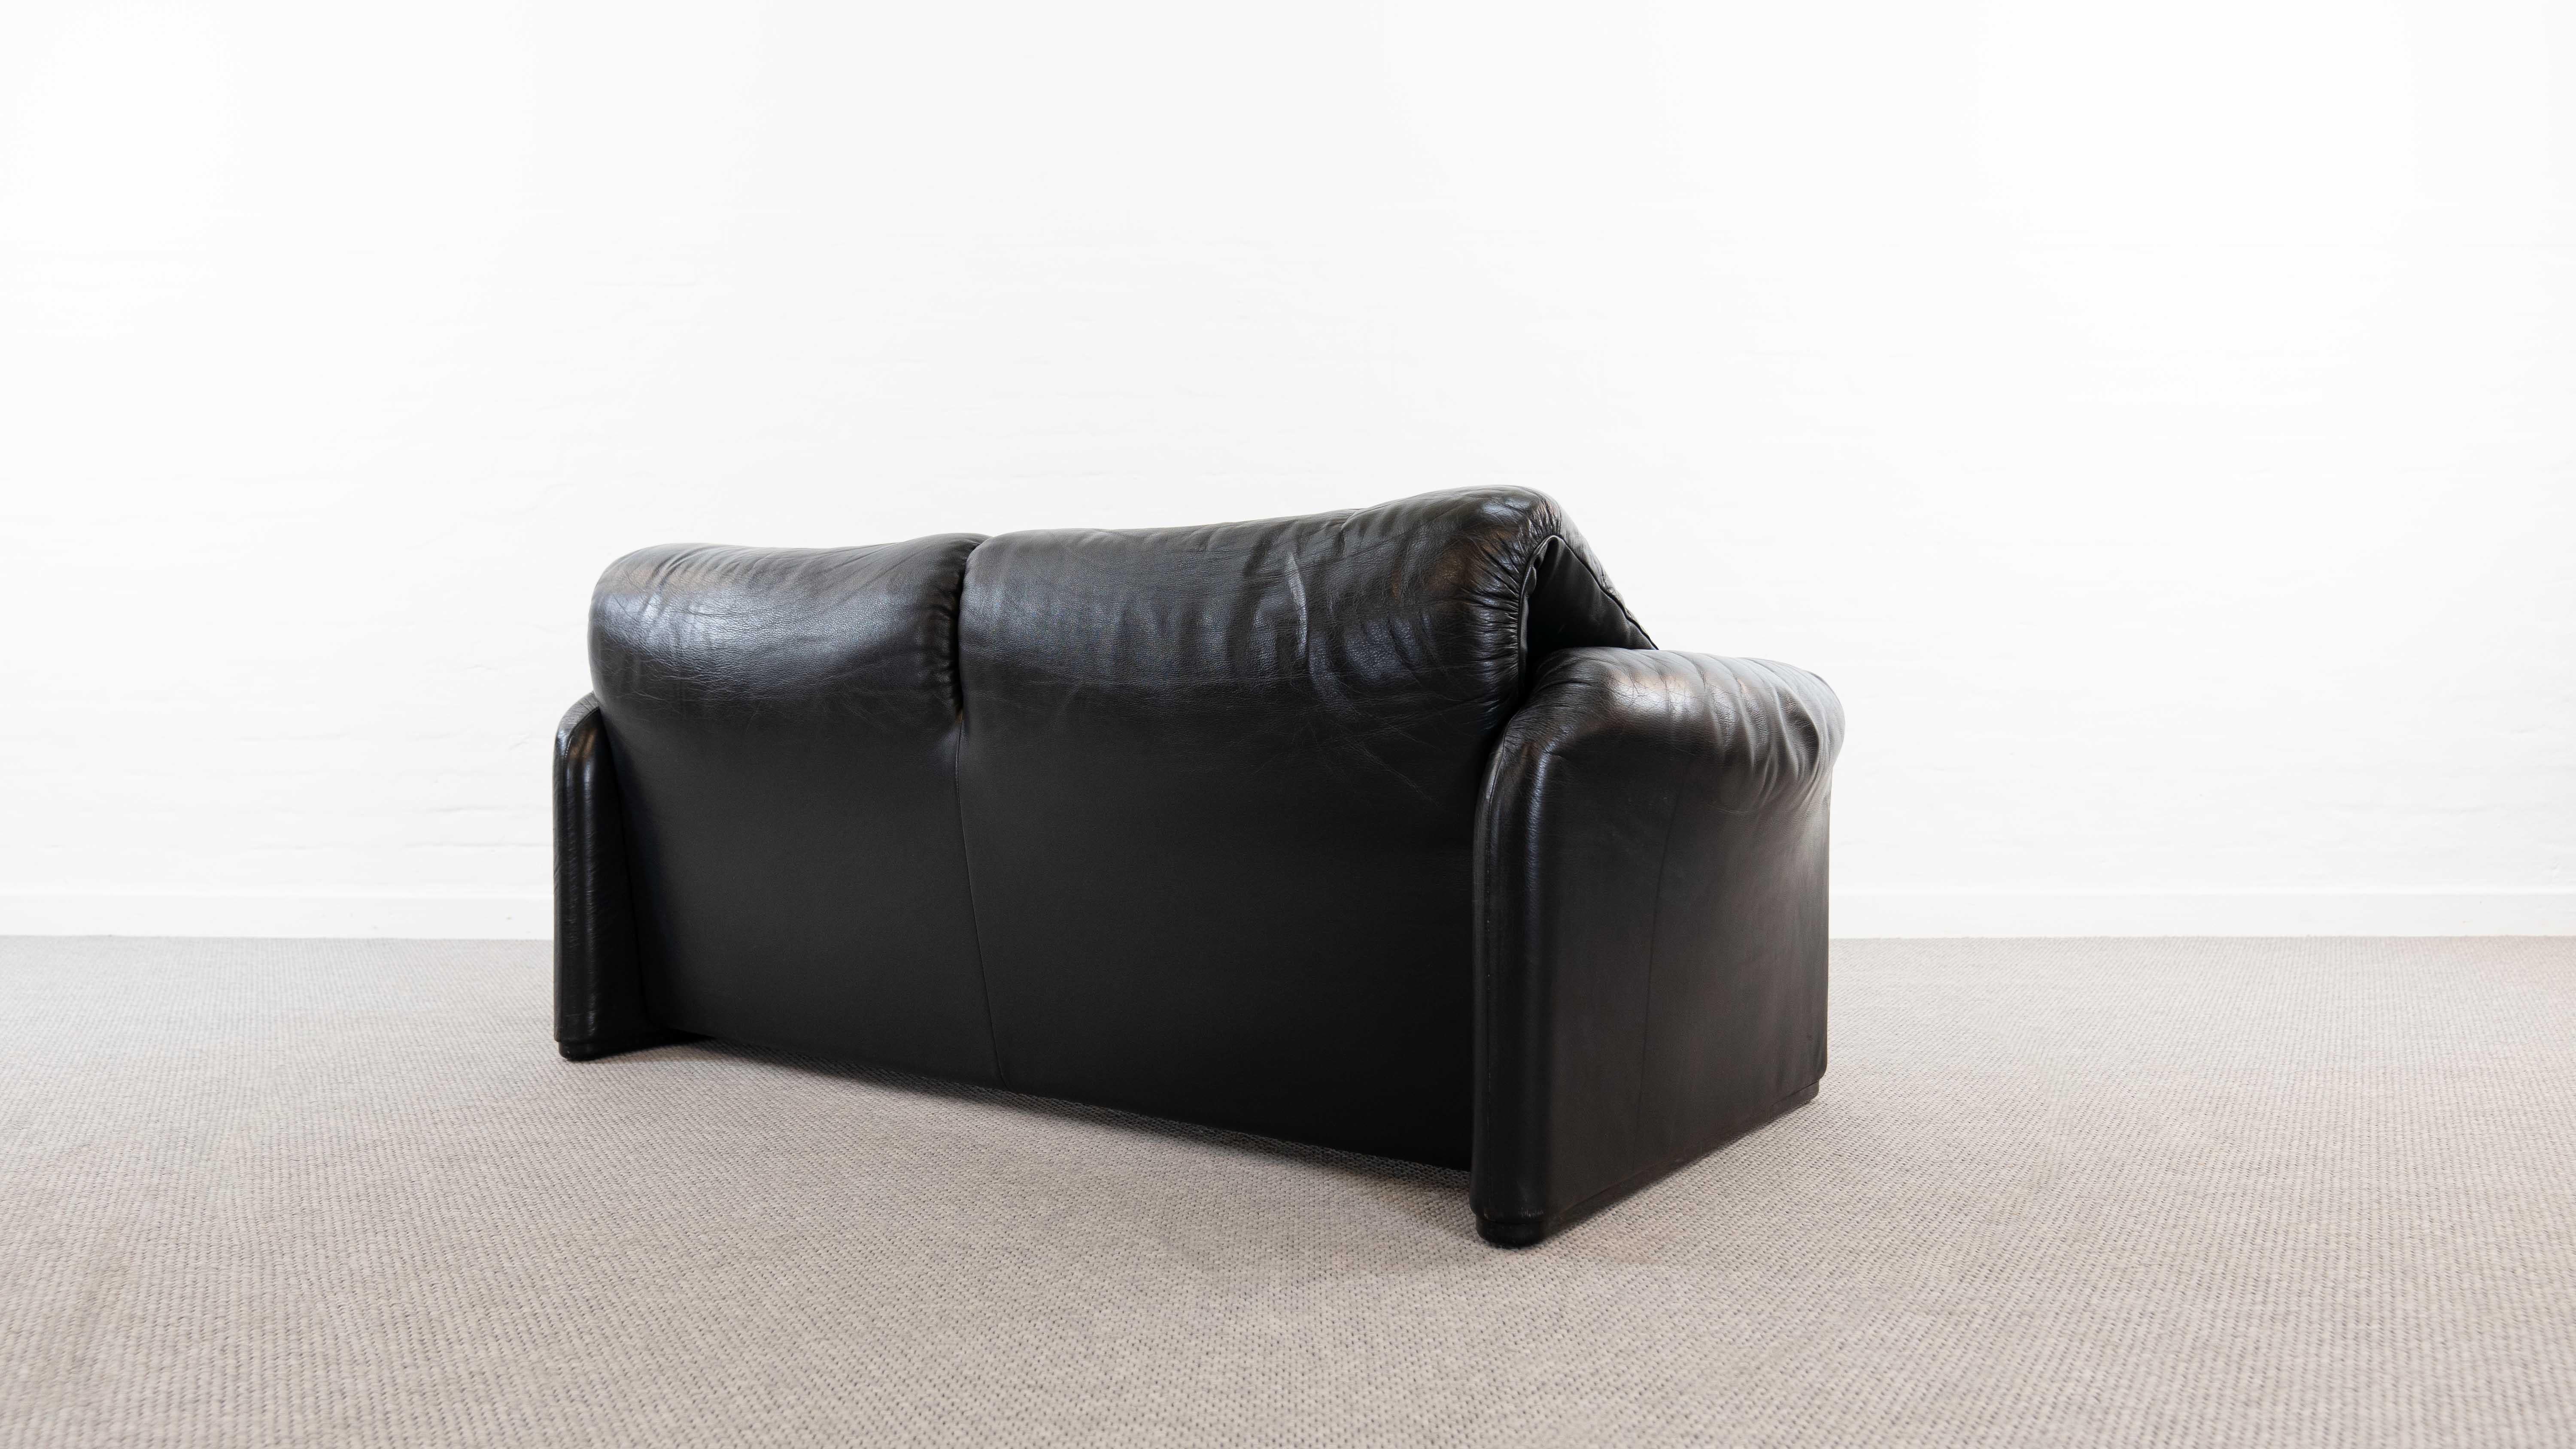 Late 20th Century Maralunga 2-Seat Sofa in Black Leather by Vico Magistretti for Cassina, Italy